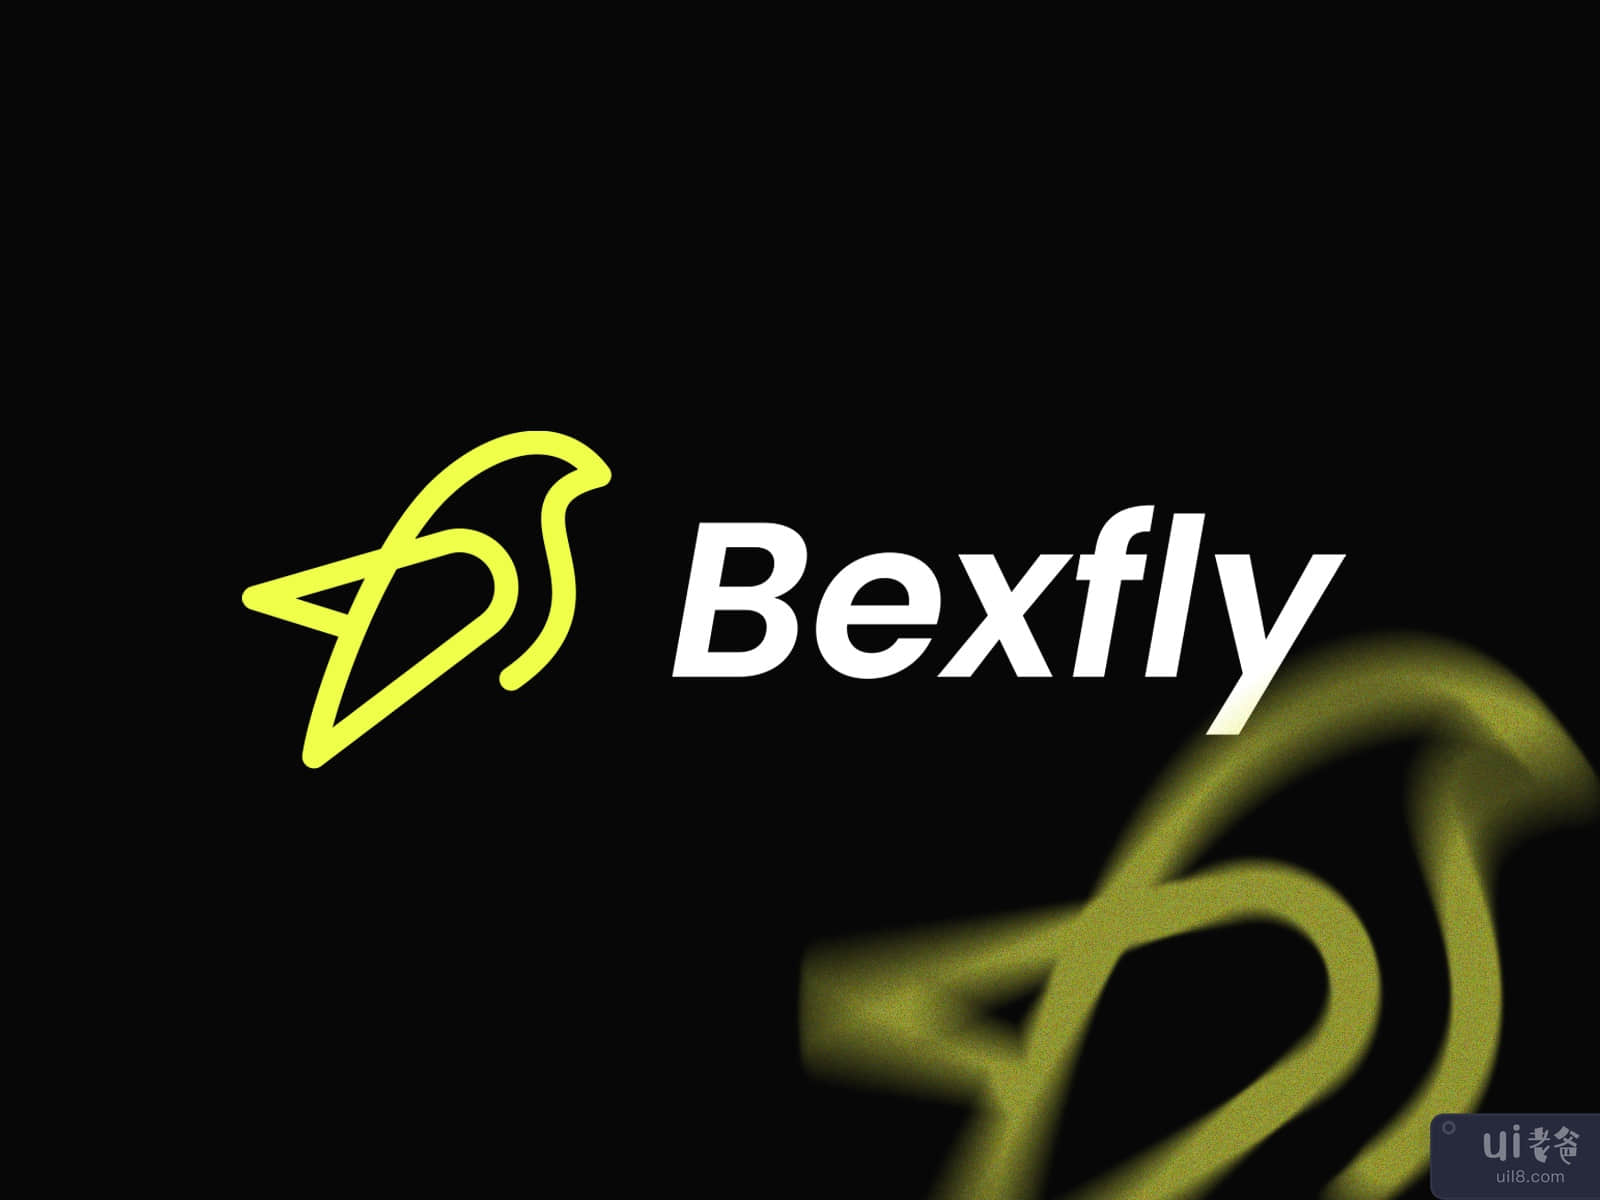 Bexfly logo design